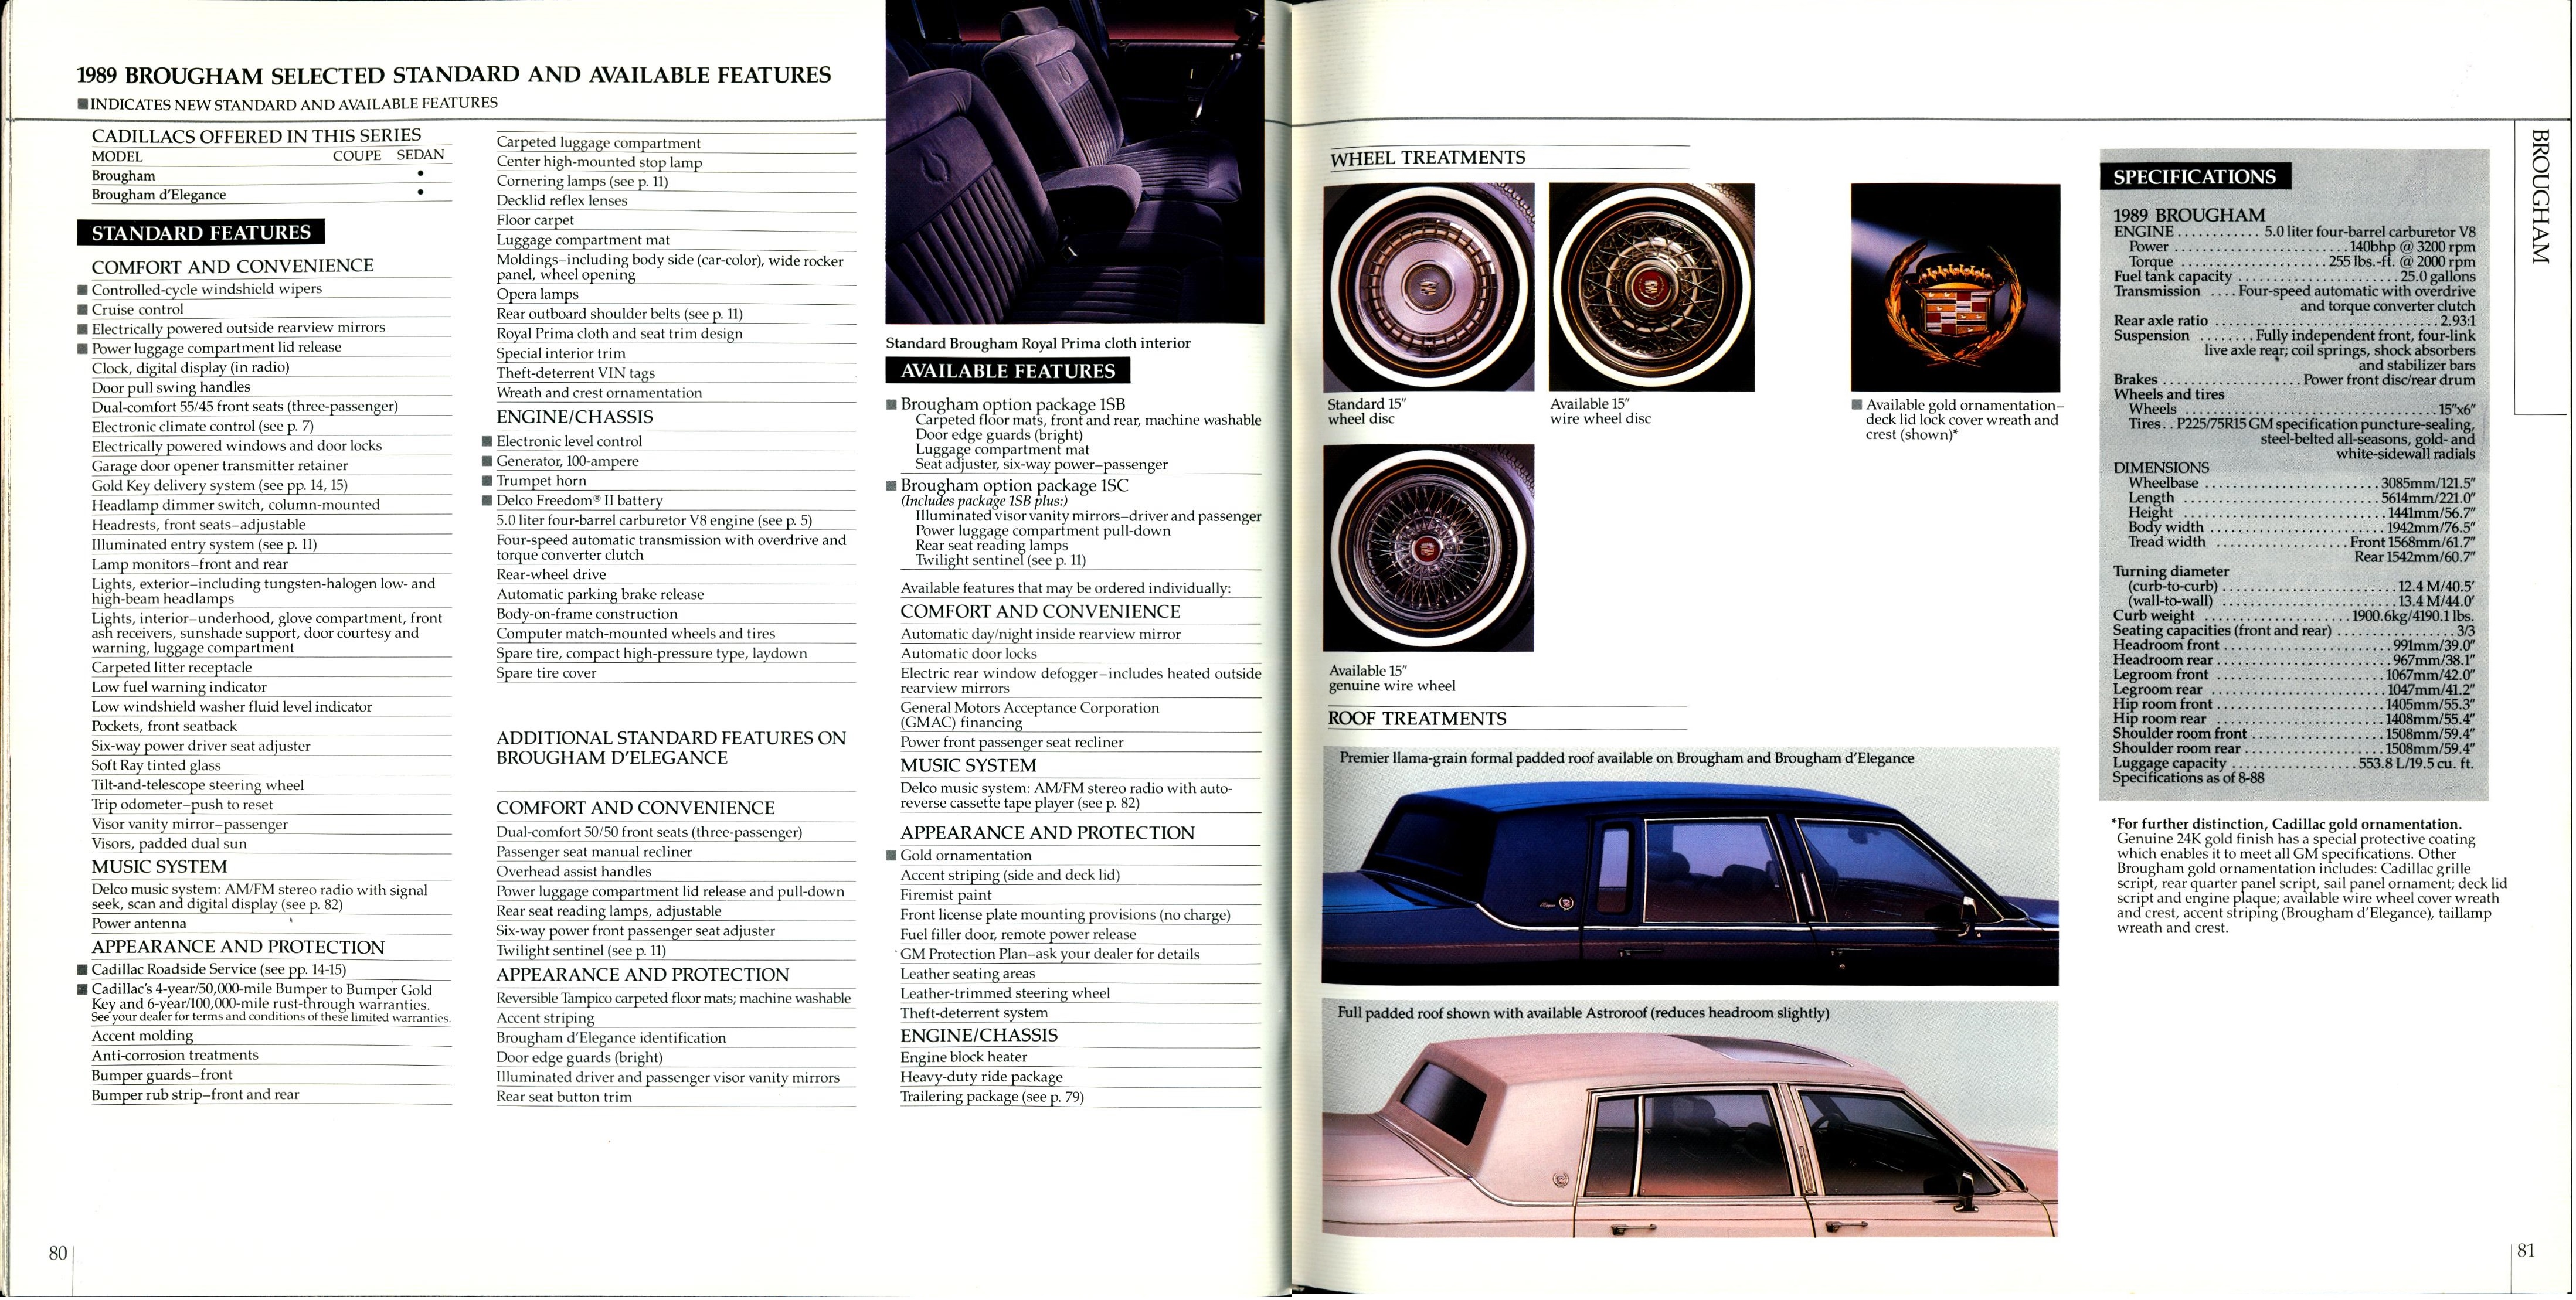 1989 Cadillac Full Line Prestige Brochure 80-81